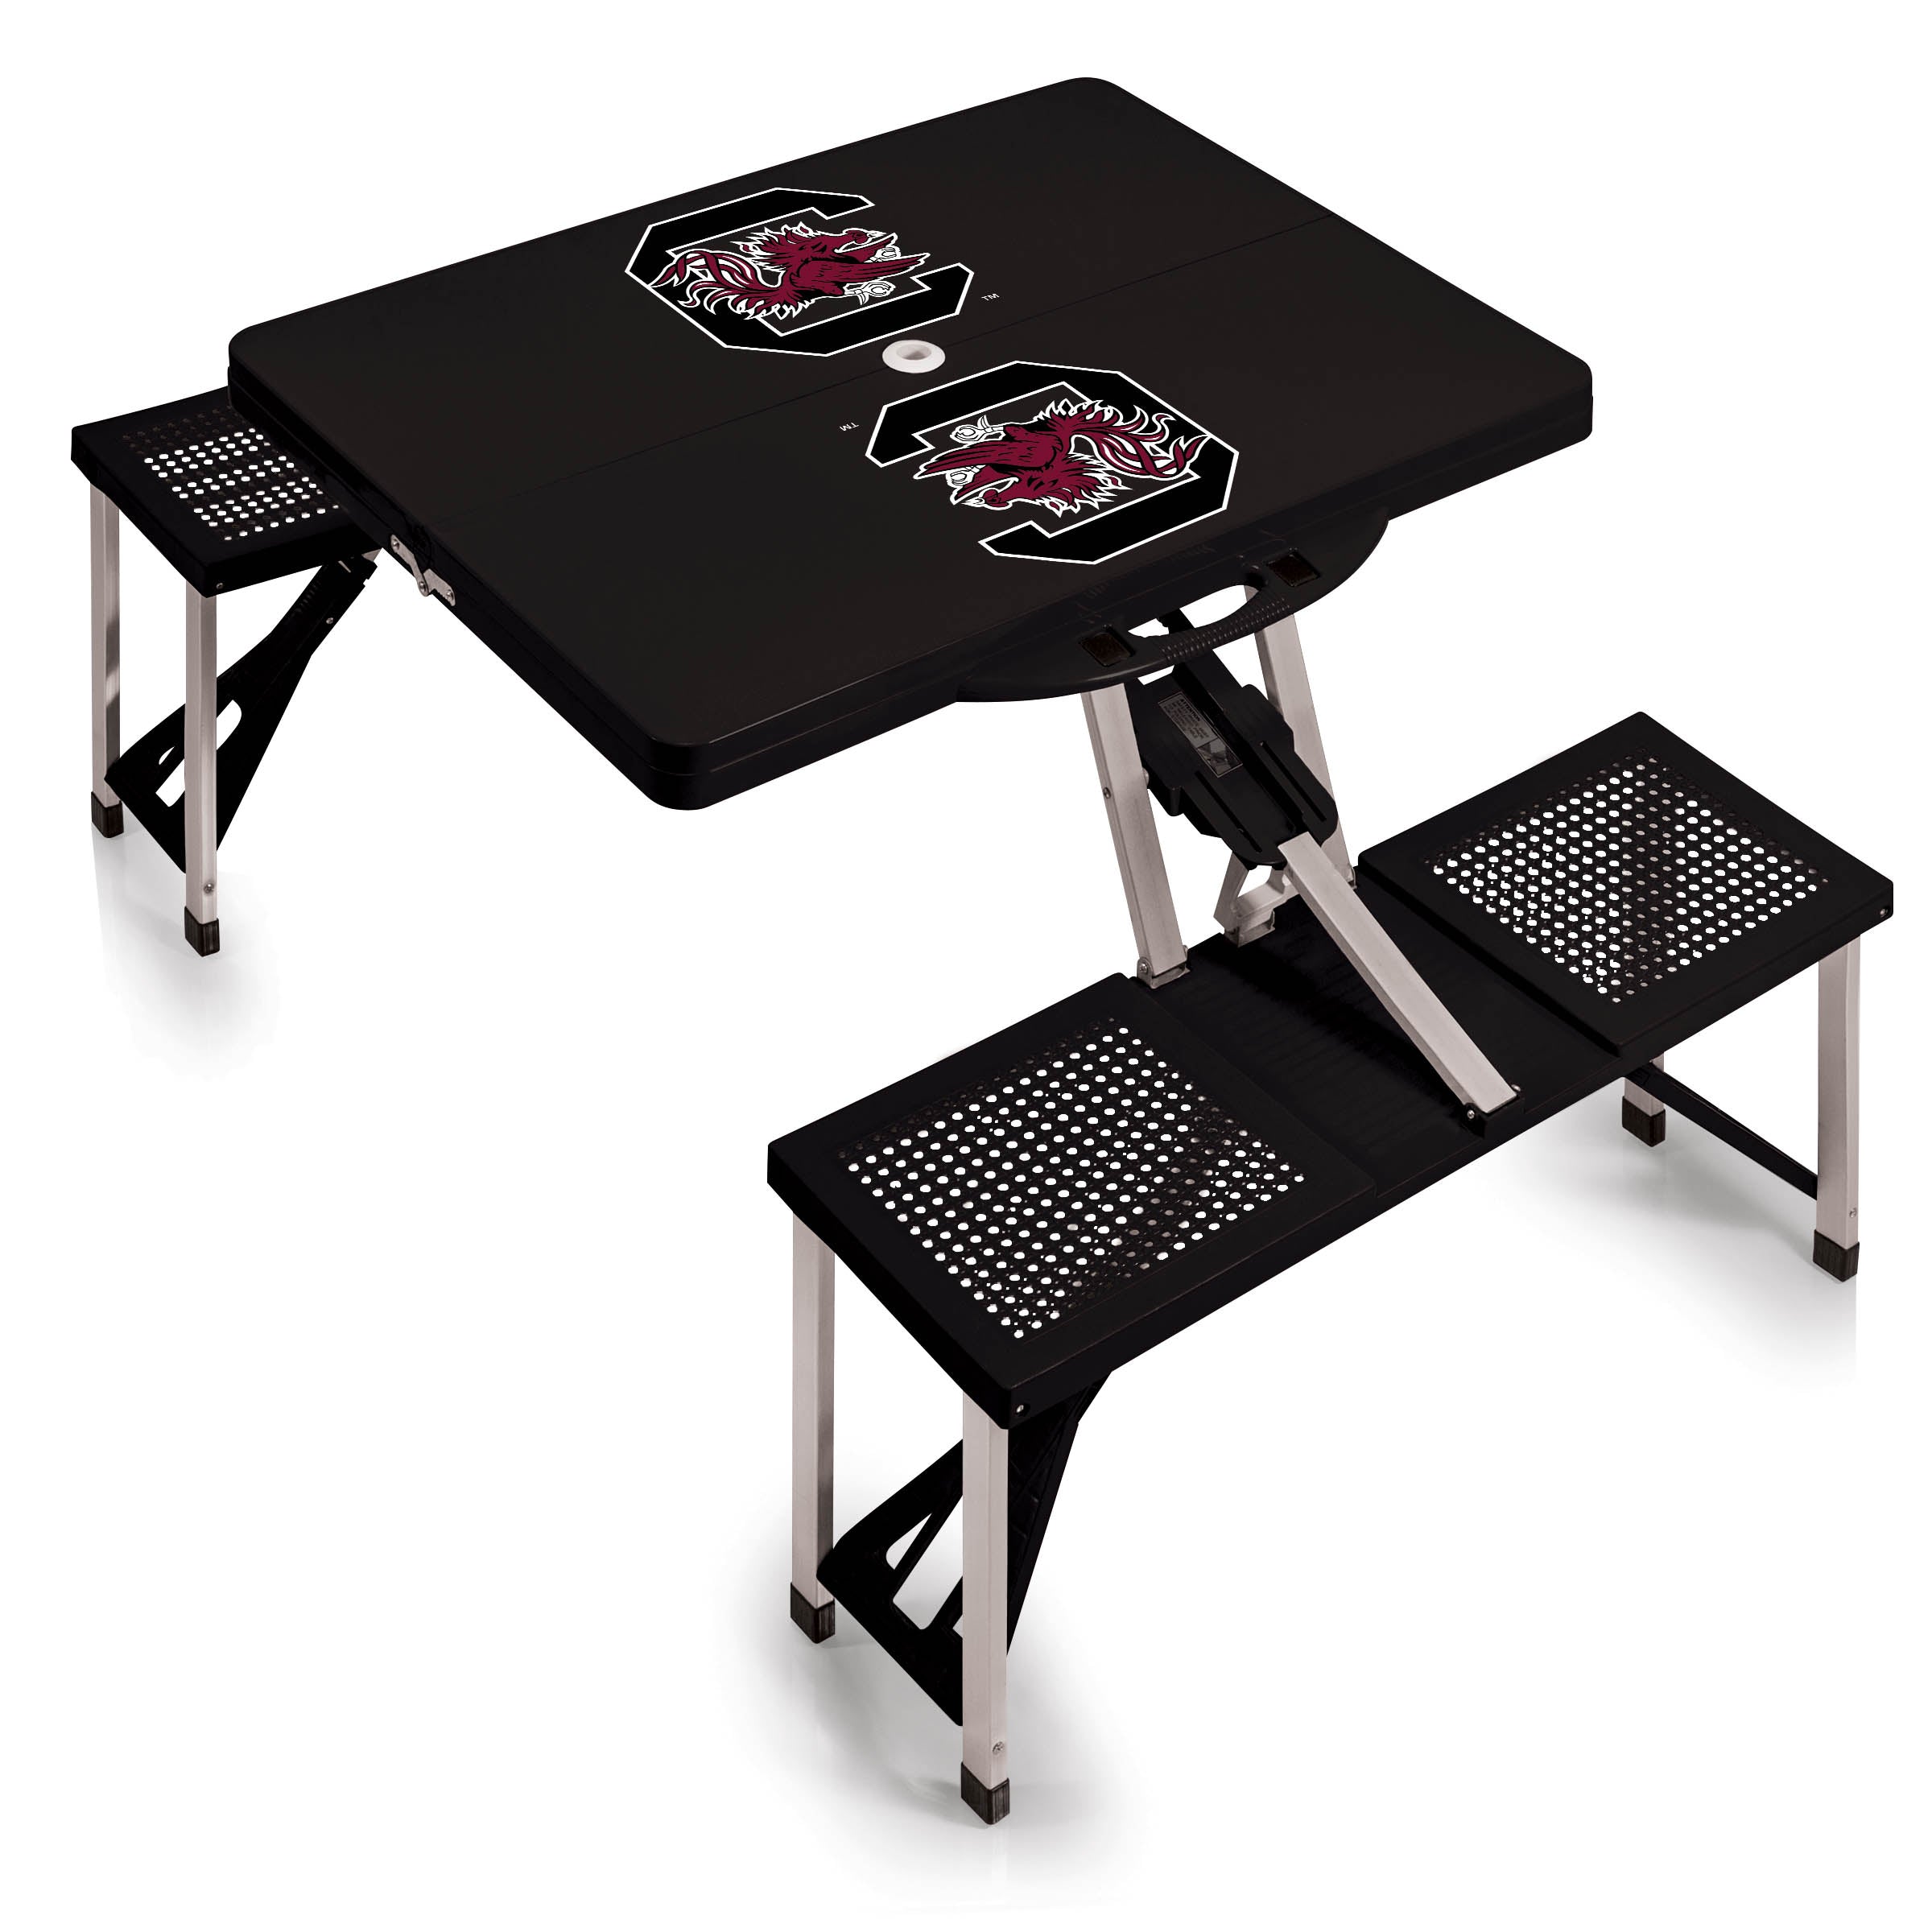 South Carolina Gamecocks - Picnic Table Portable Folding Table with Seats